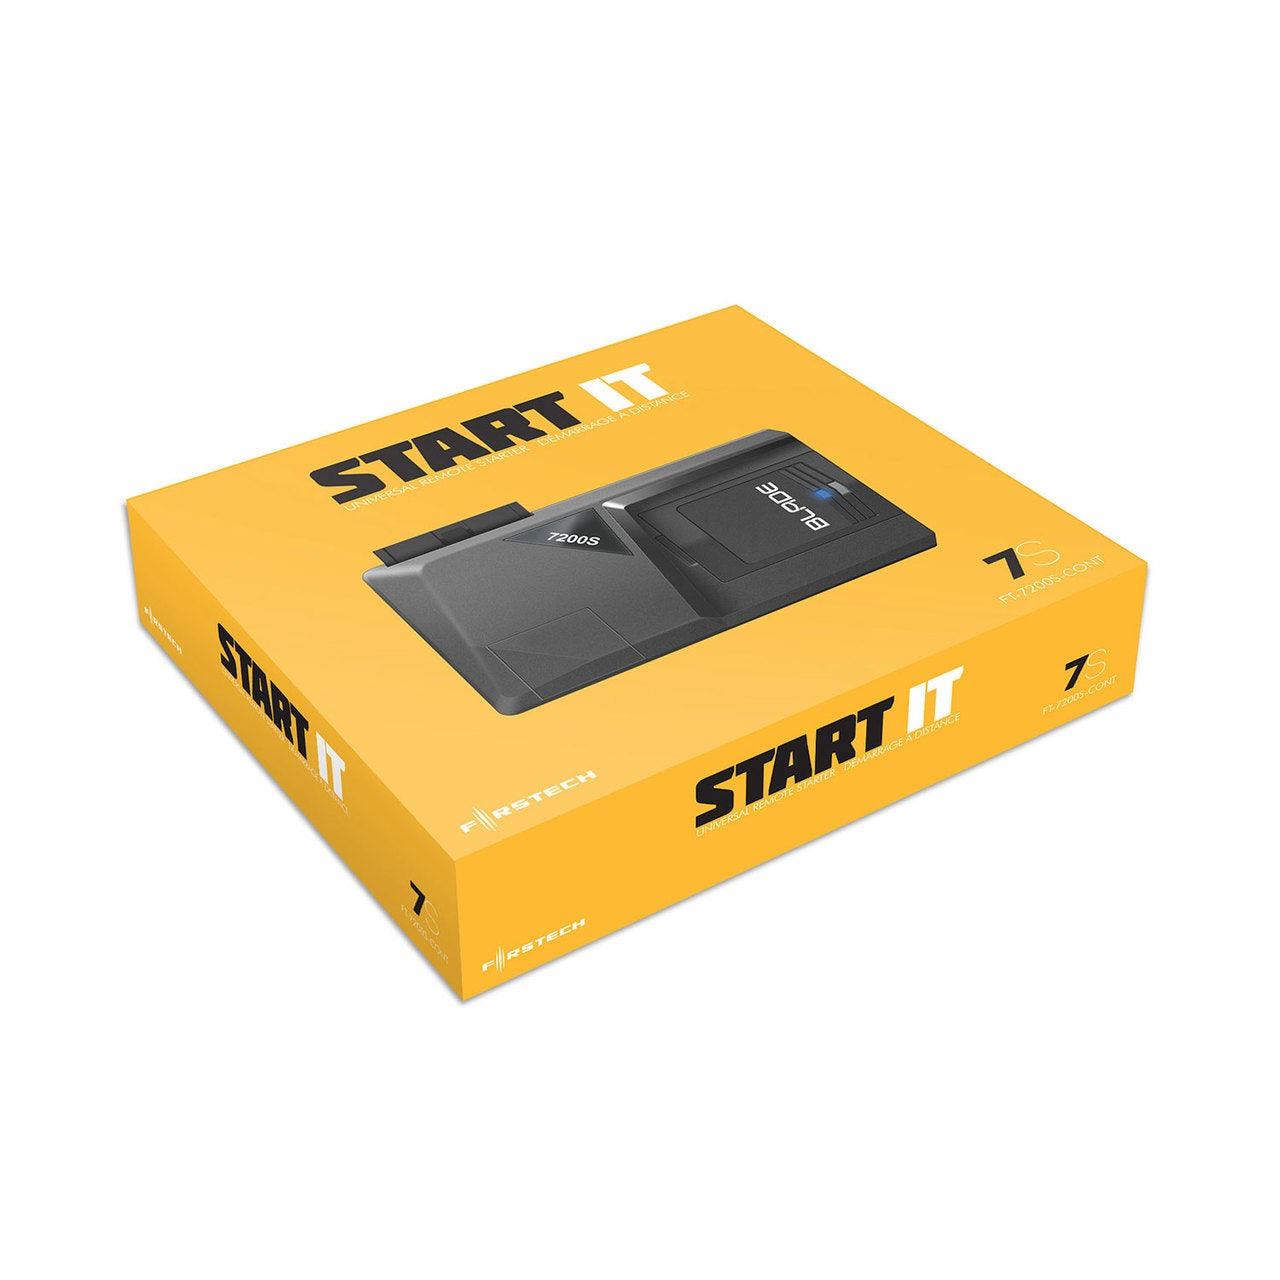 Compustar FT-7200S-CONT OEM Key Fob Remote Starter